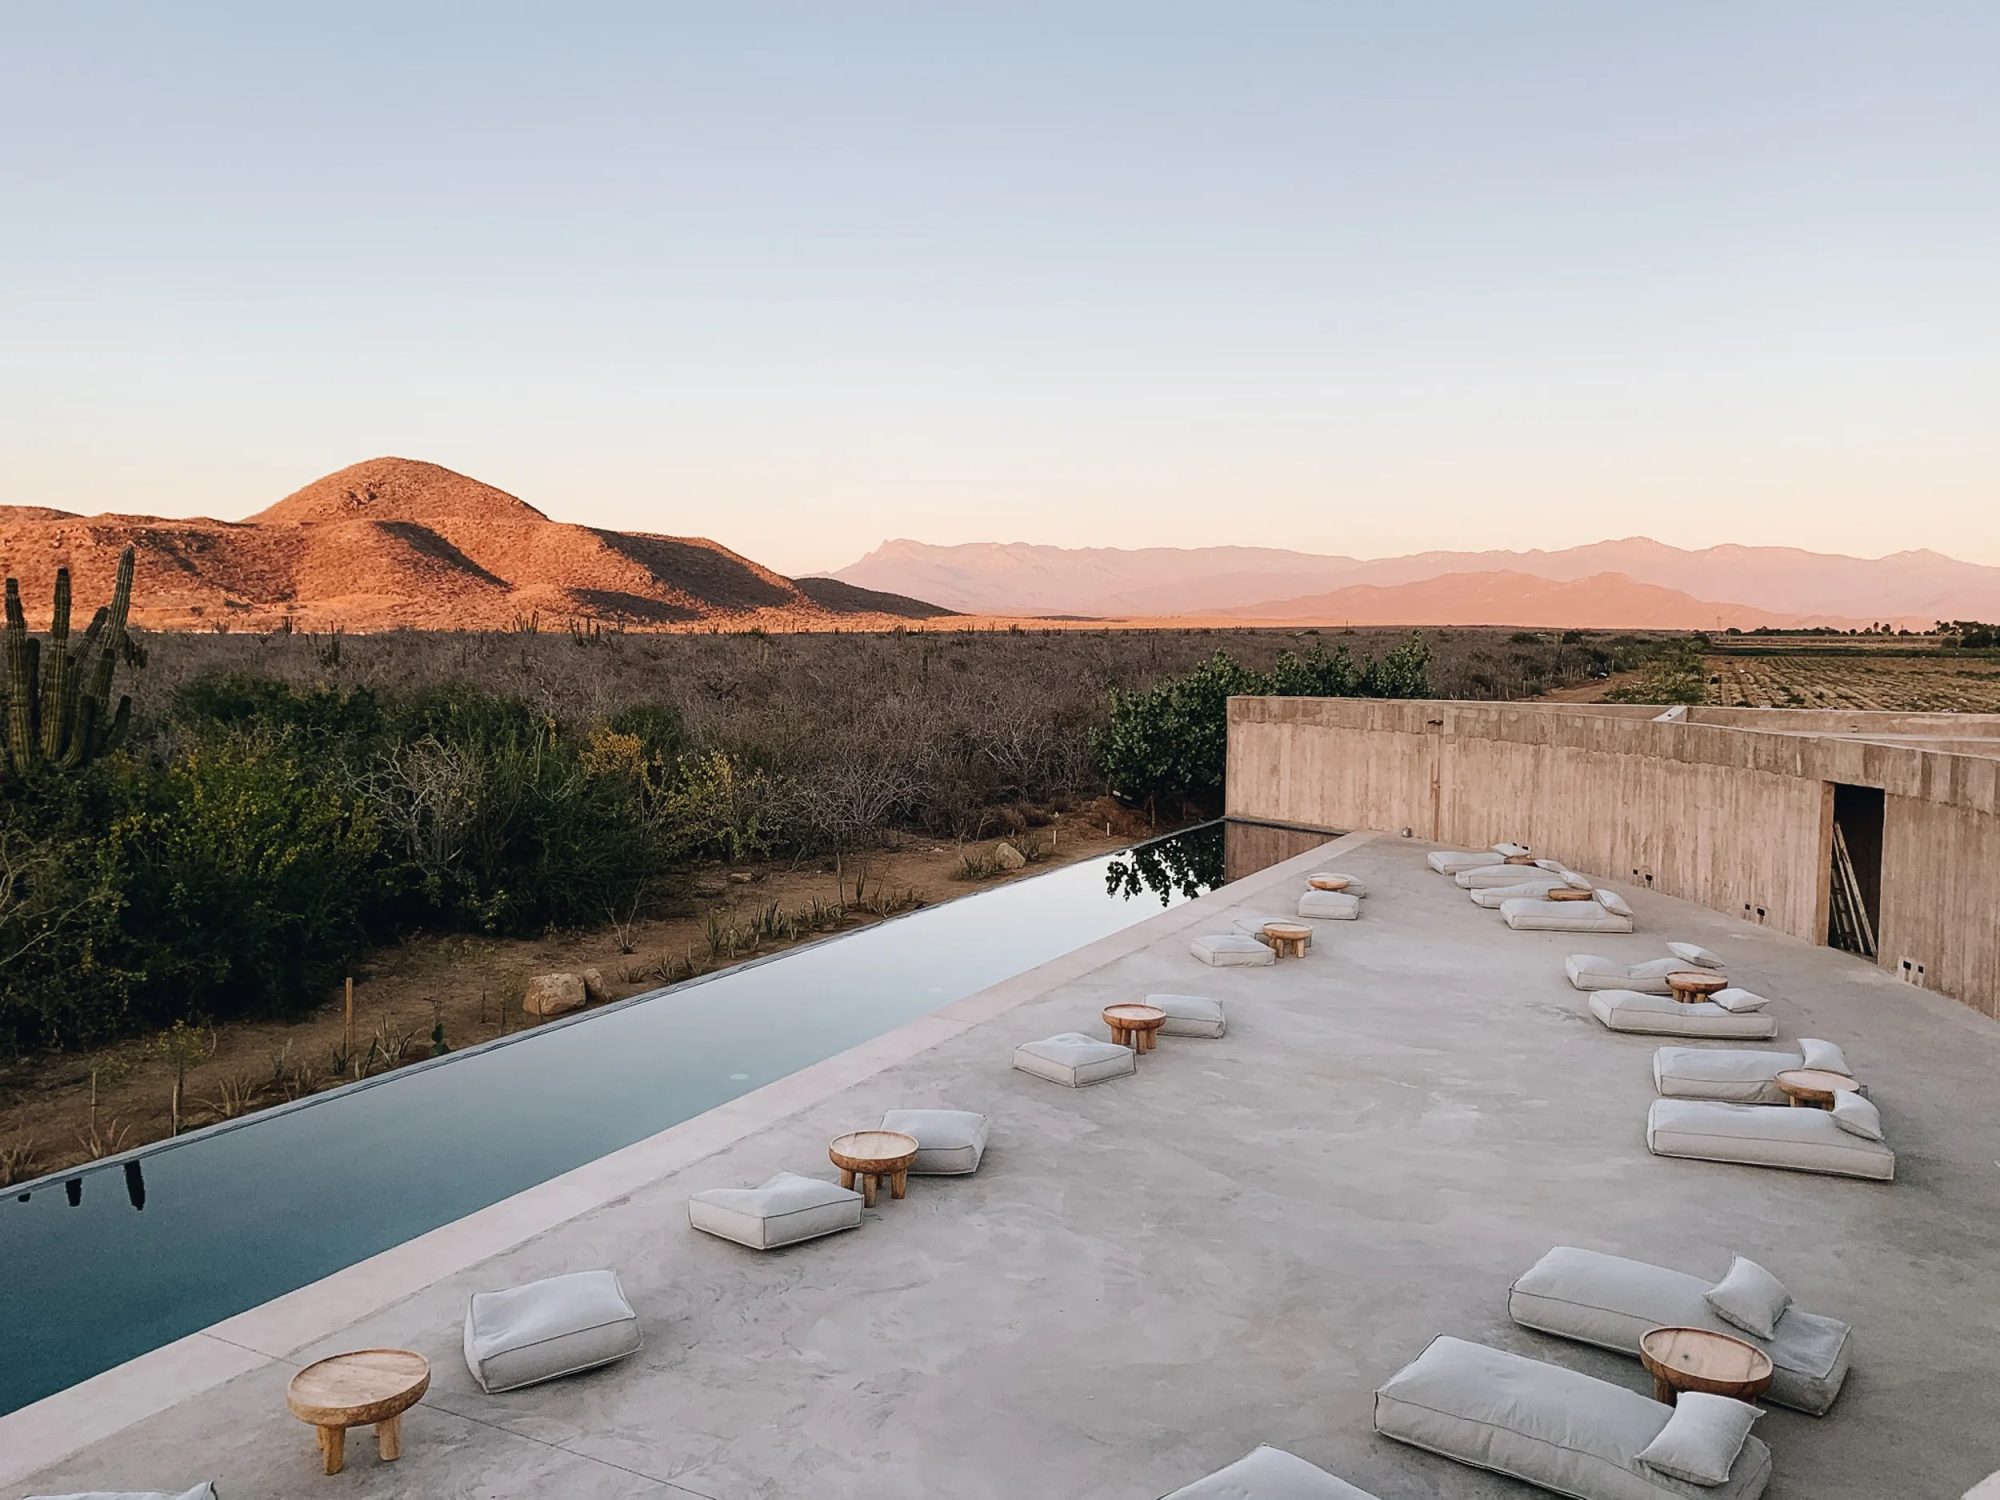 Paradero Todos Santos expands with luxurious residences in Baja California Sur